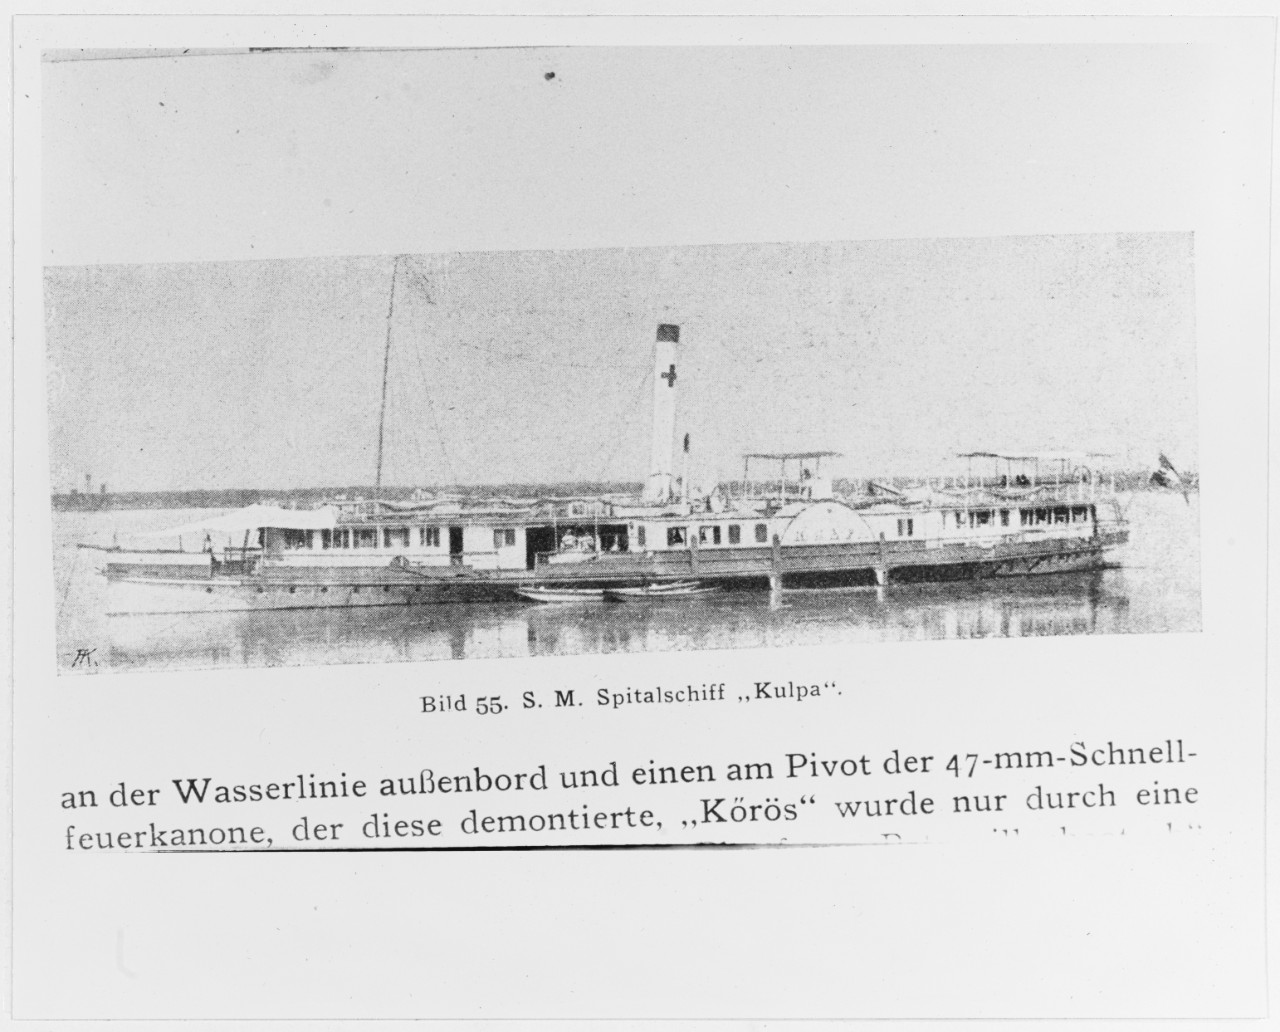 KULPA (Austrian River Hospital Ship, 1914-1917)